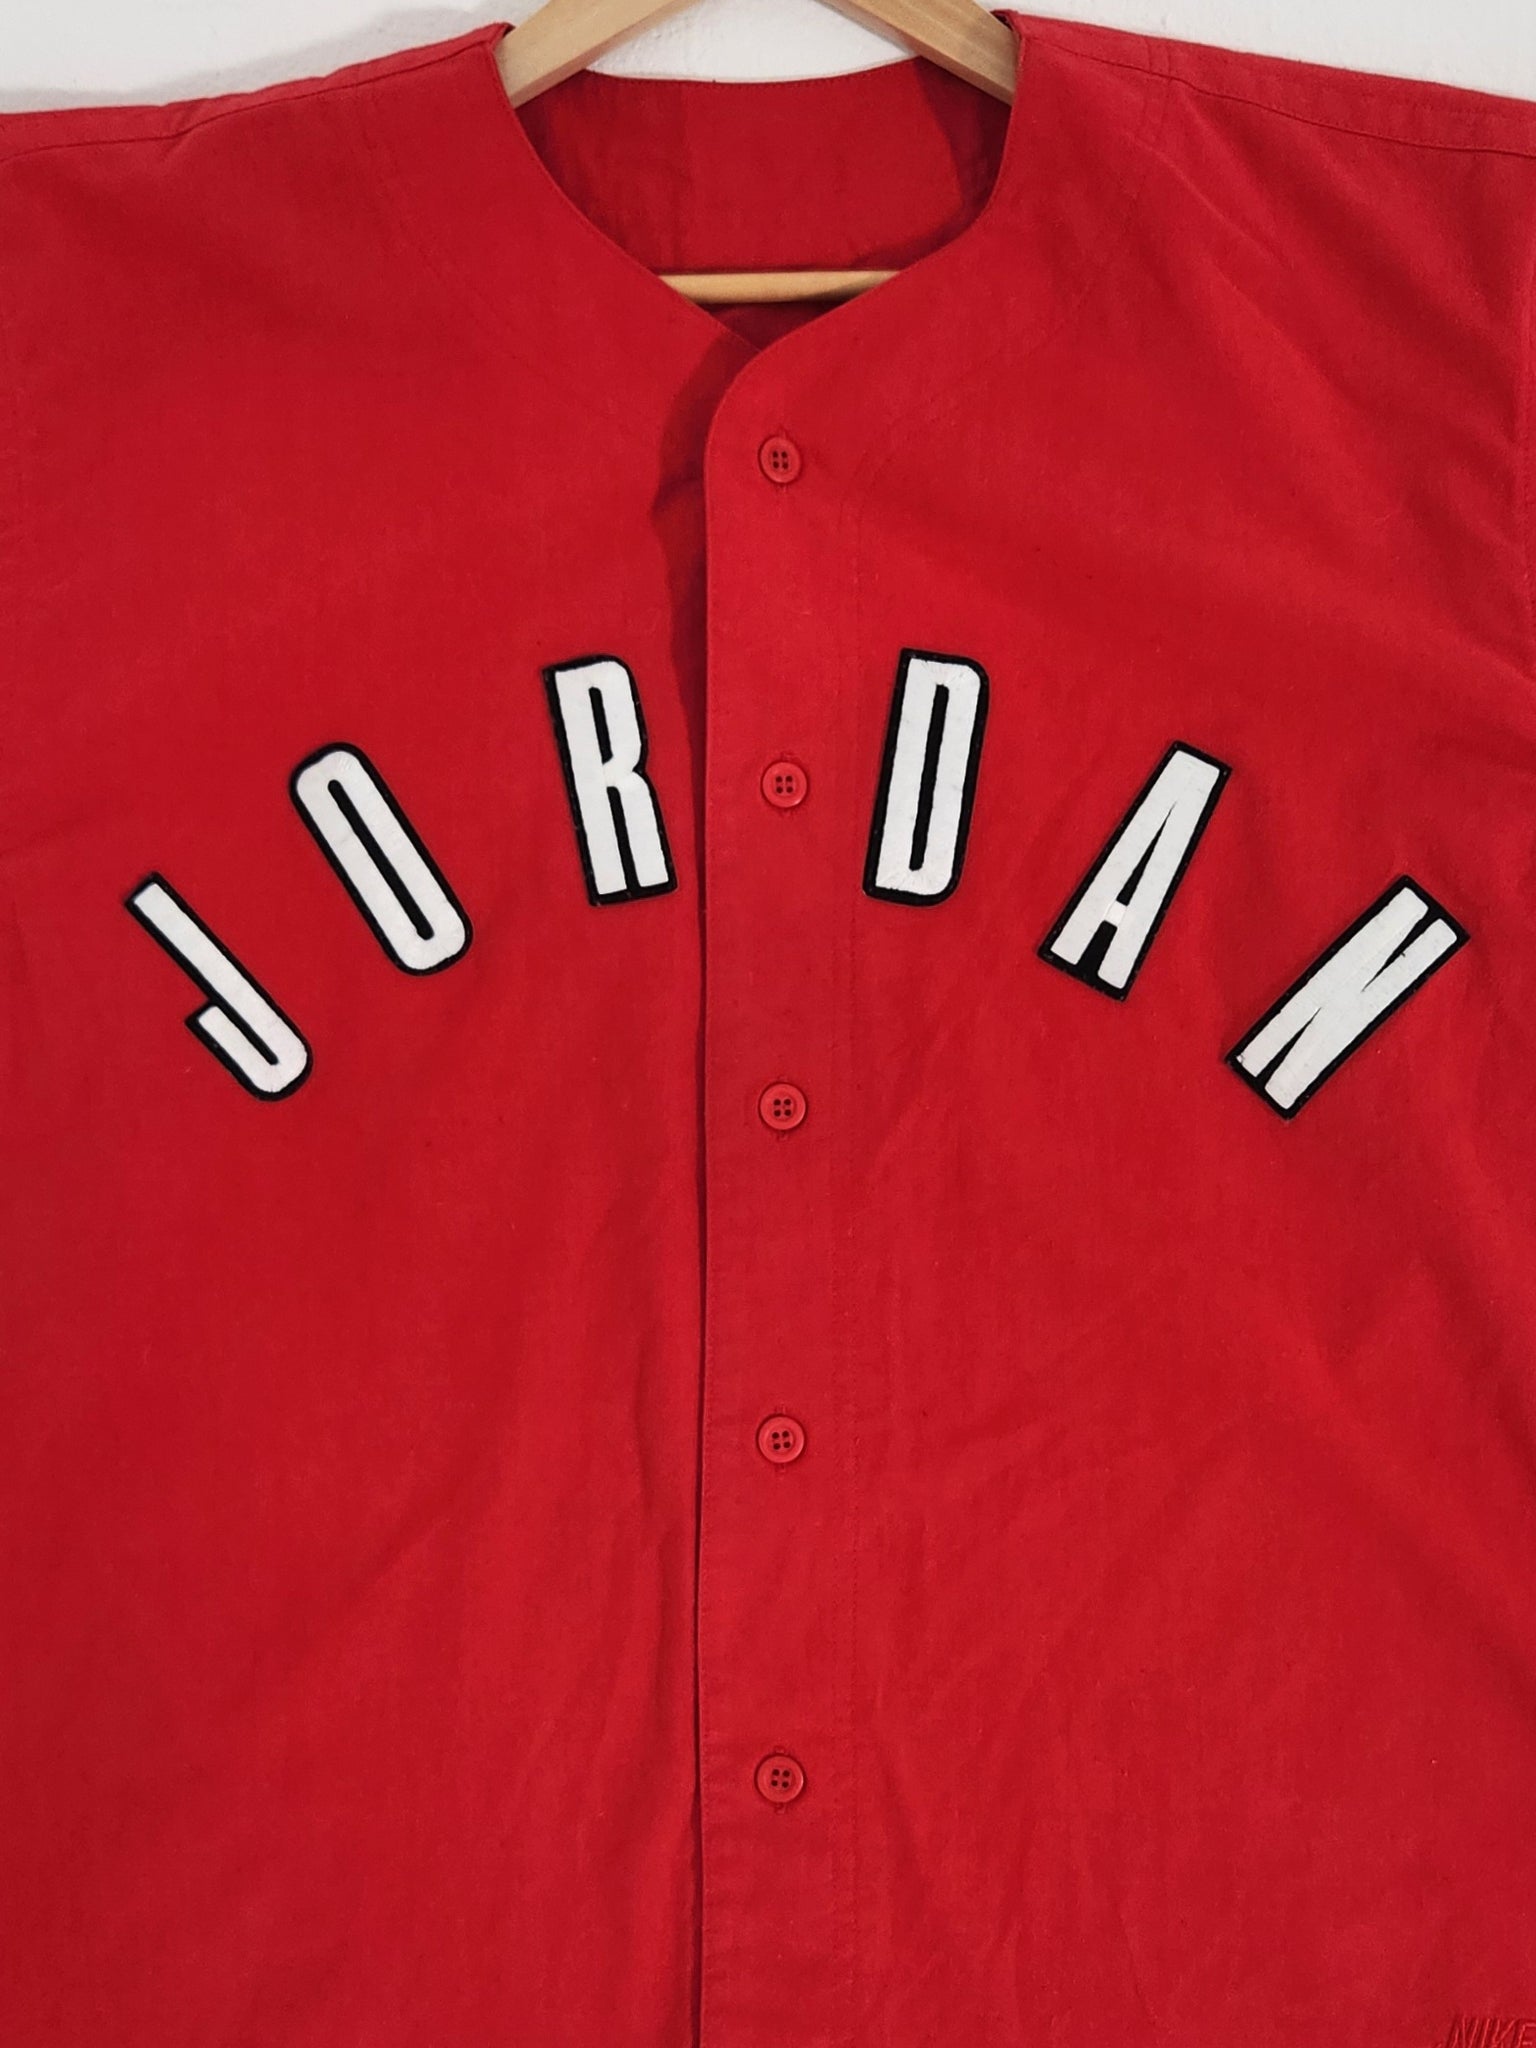 Vintage 1990s NIKE Michael Jordan Spelled Out Red Baseball Jersey Sz.